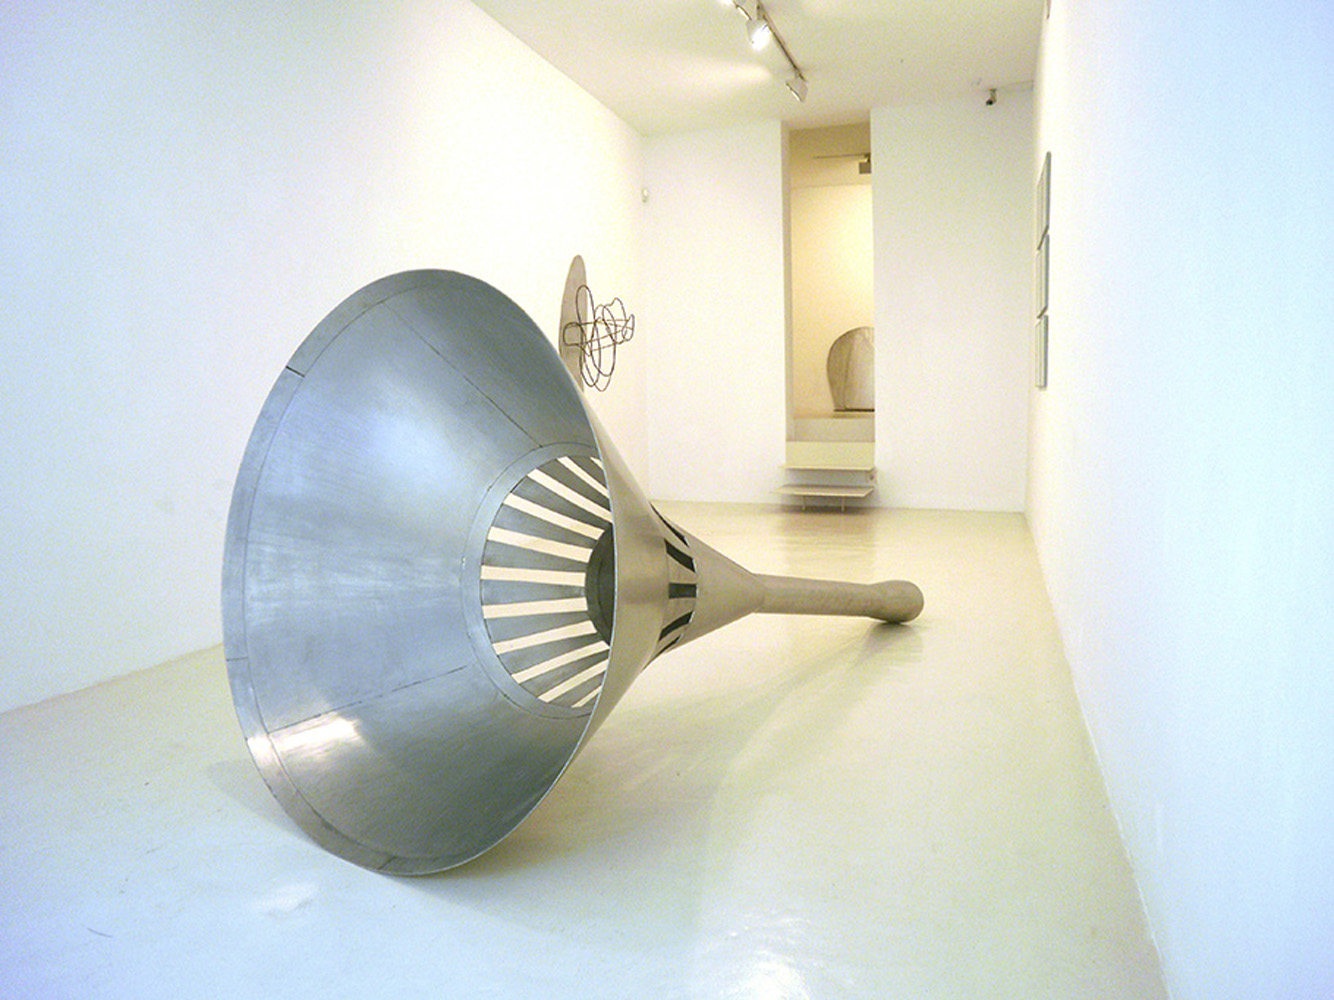 'Baalbek III', 2008, acero inoxidable, 139 x 294 x 139 cm. Galeria Maior Palma, 2010